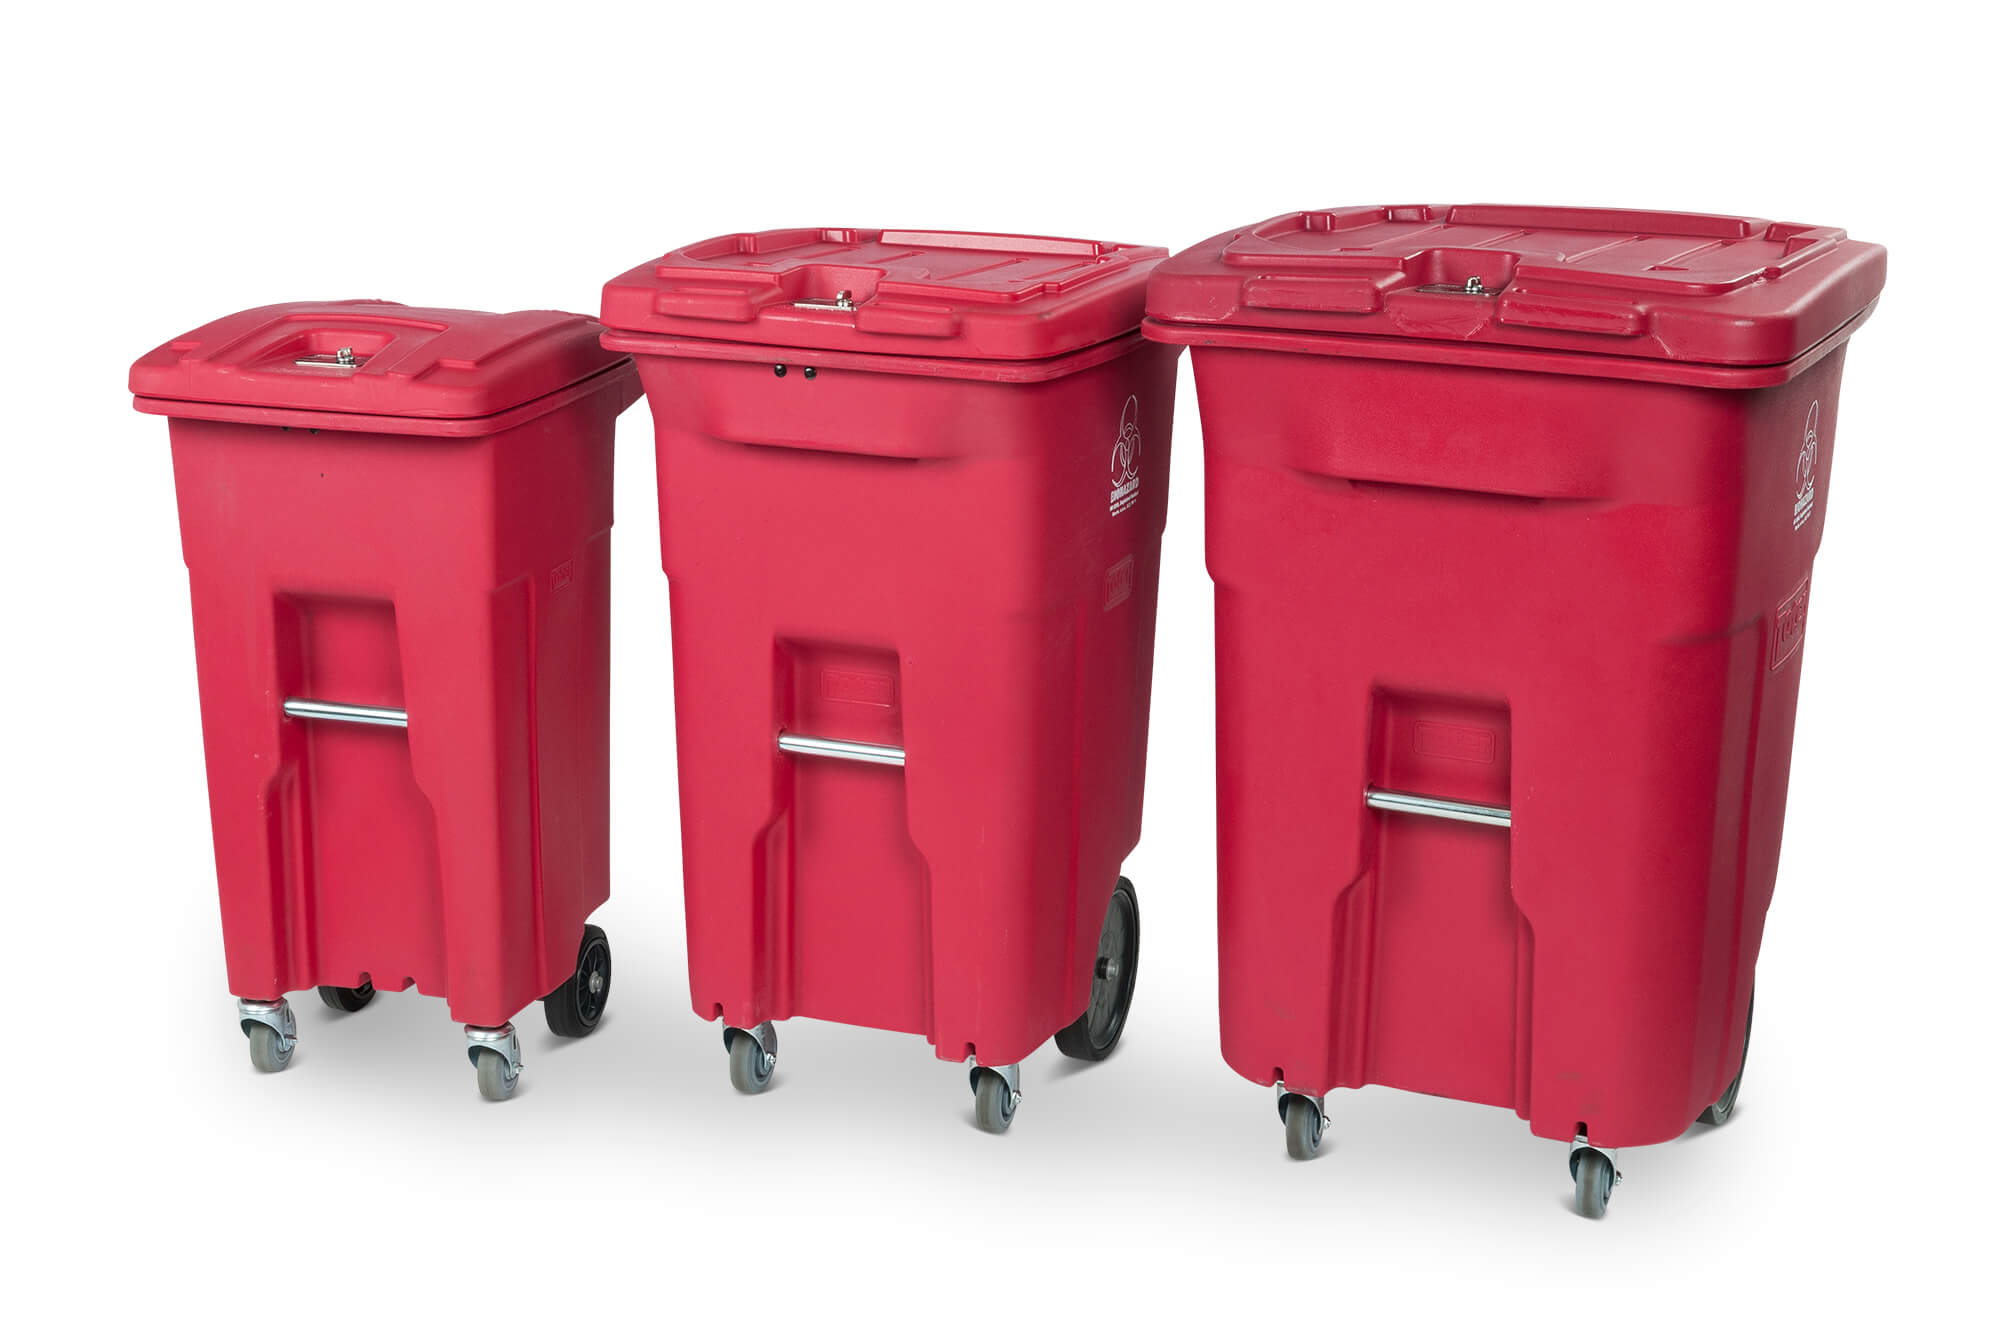 32 Gallon Red Bags for Biohazardous Waste